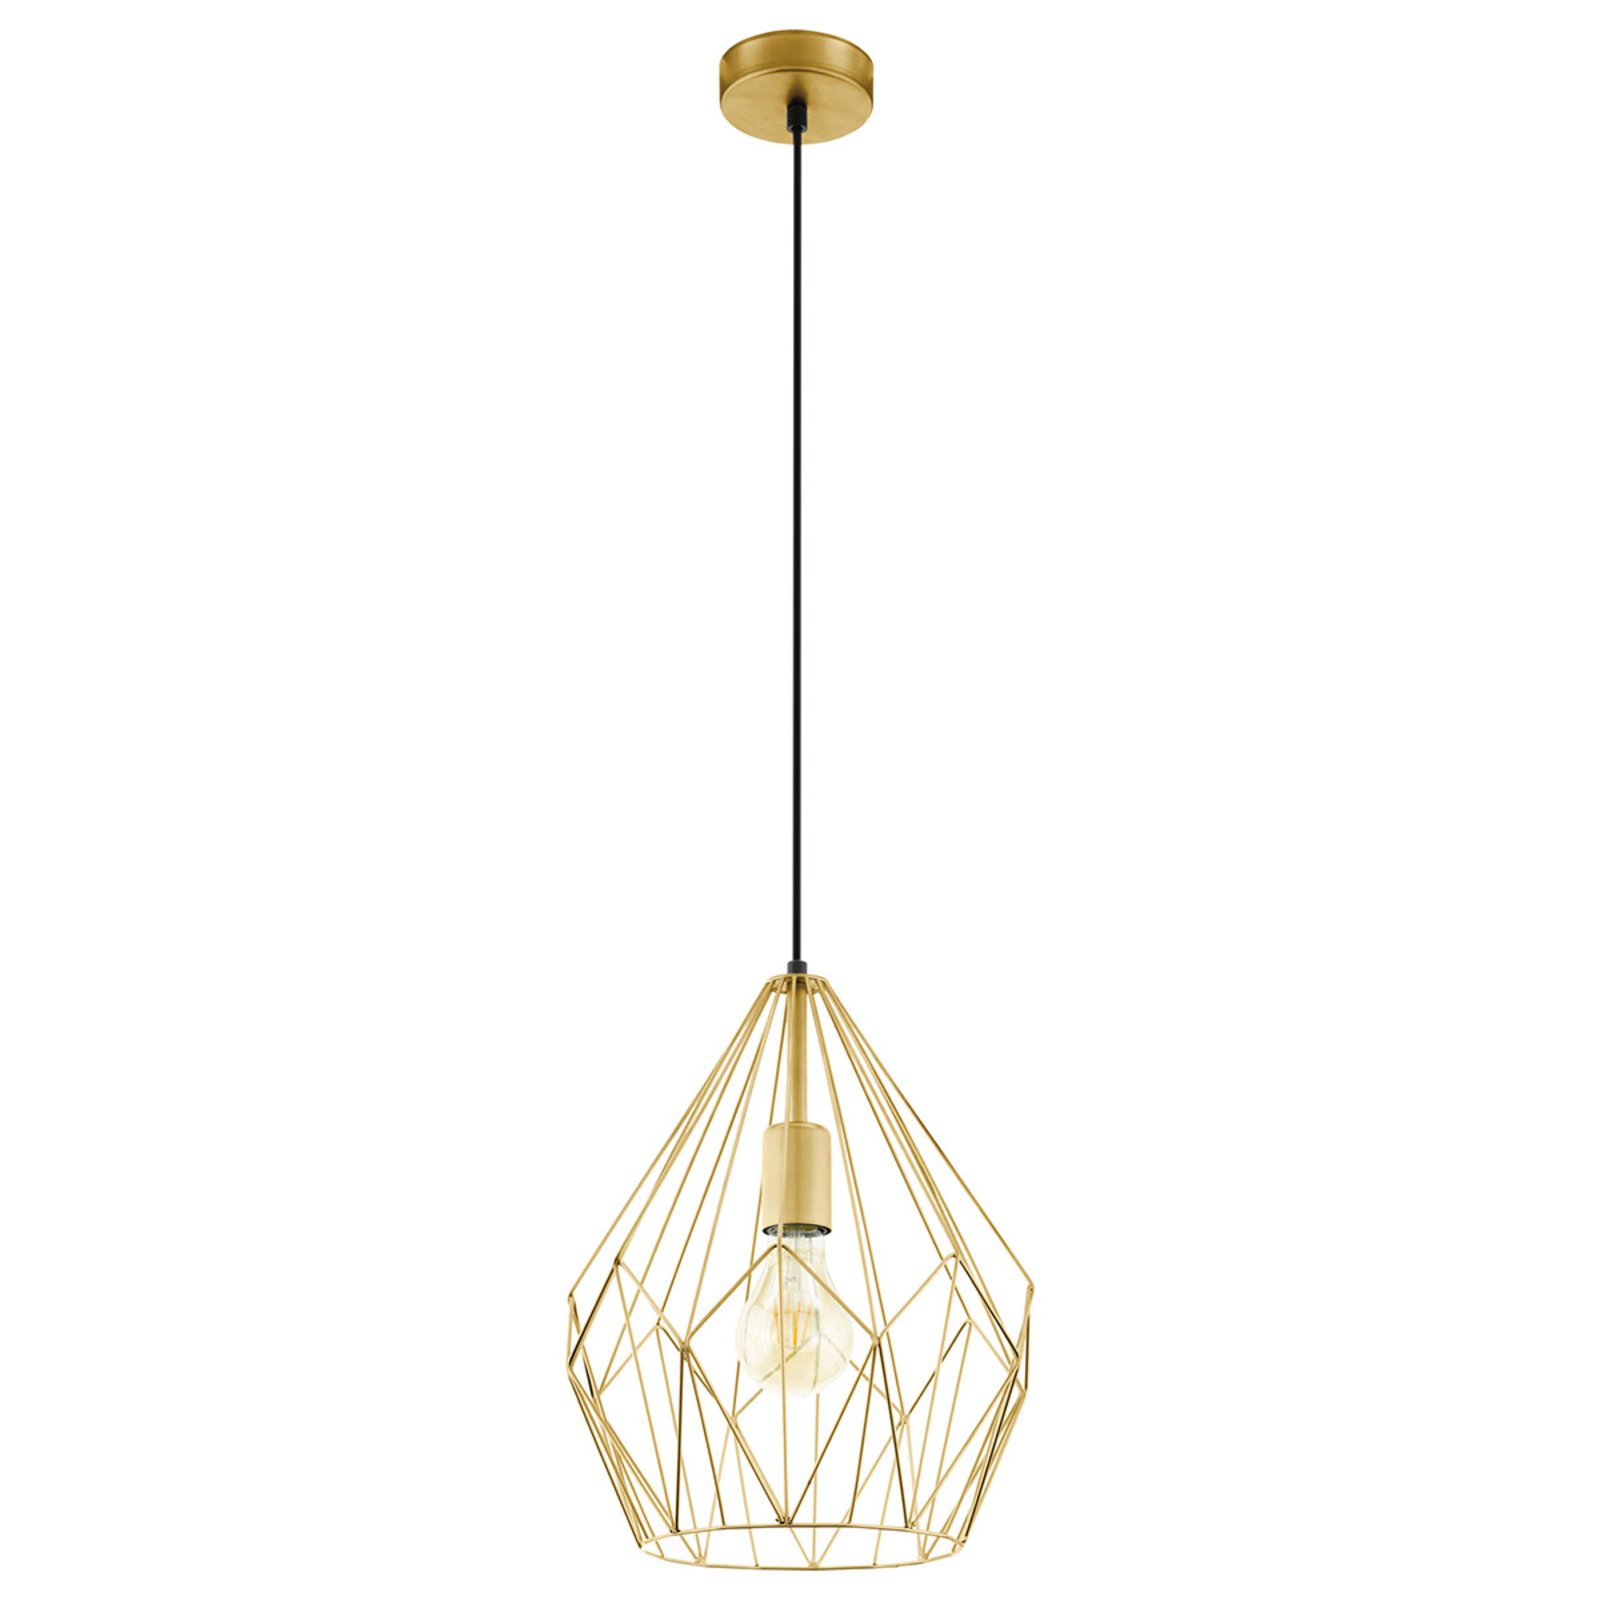 Hanglamp Carlton met kooikap, goud Ø 31cm